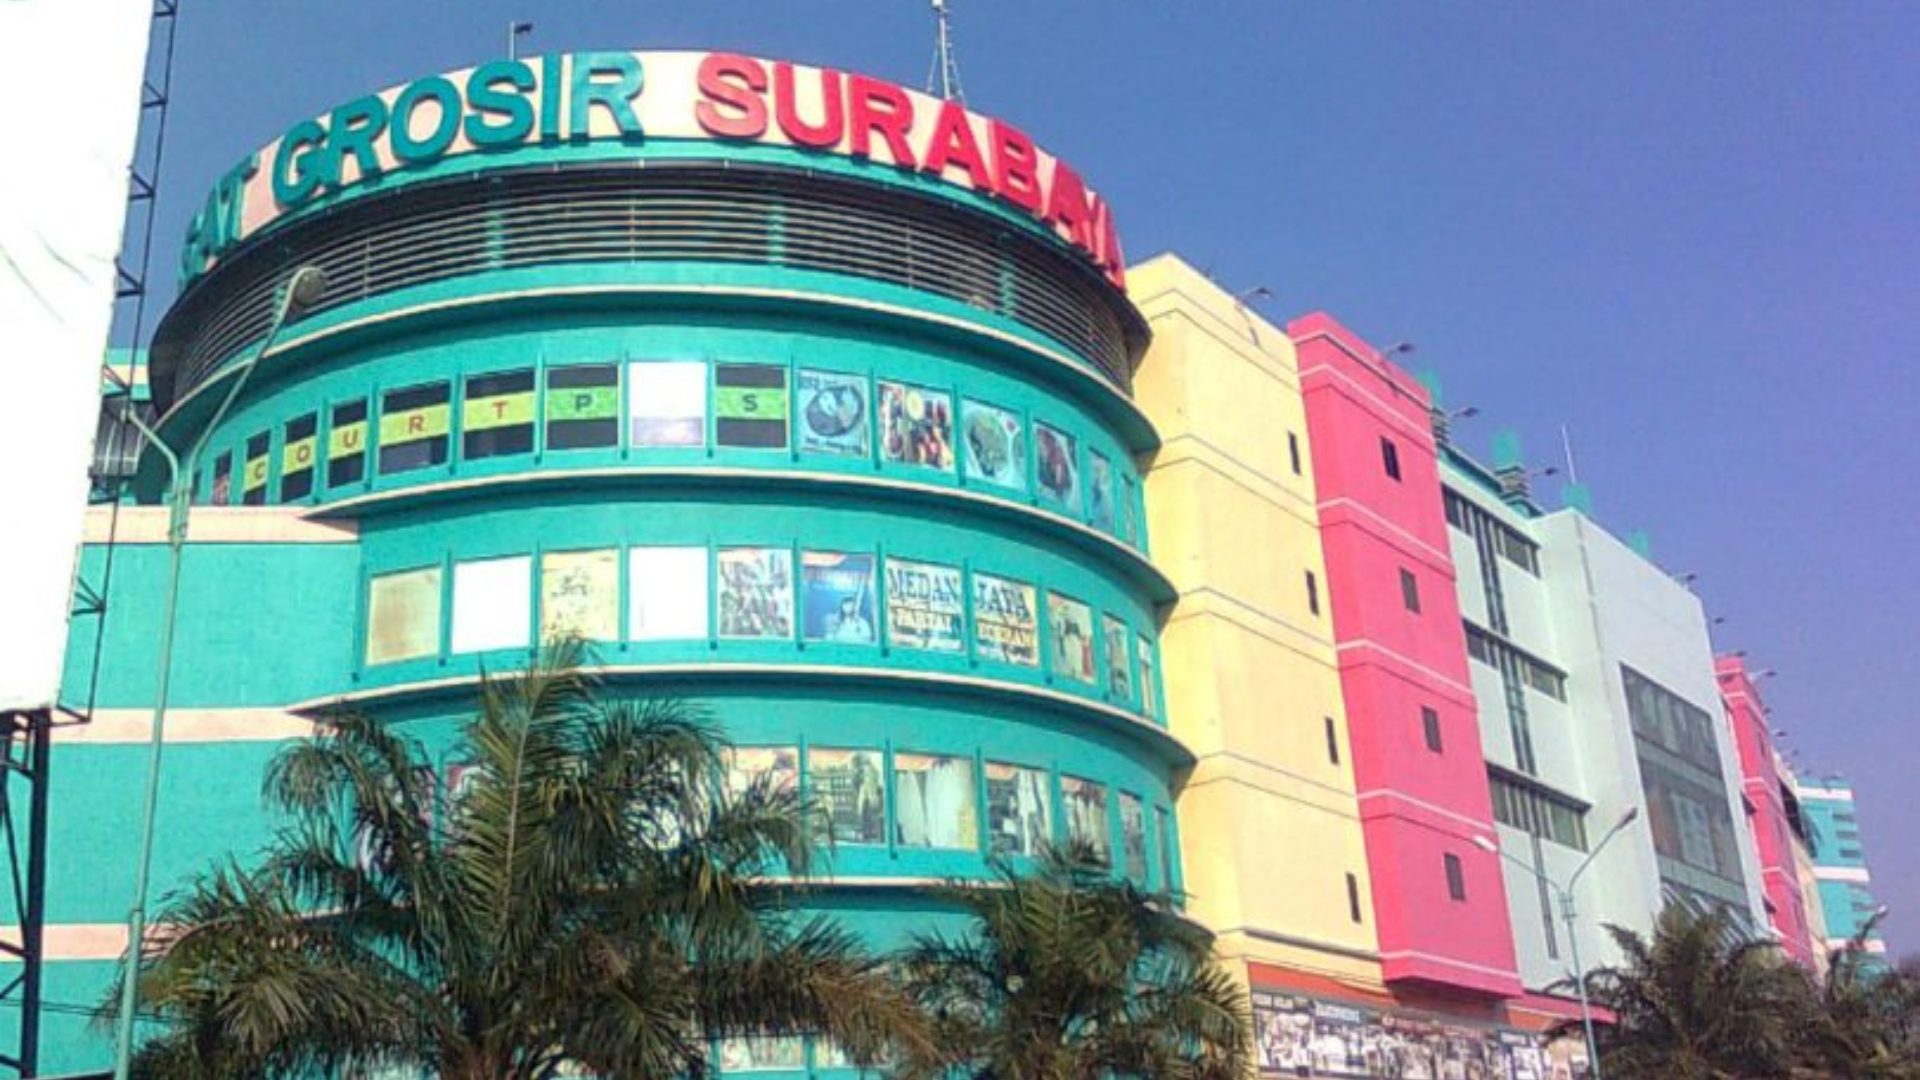 Pusat Grosir Surabaya